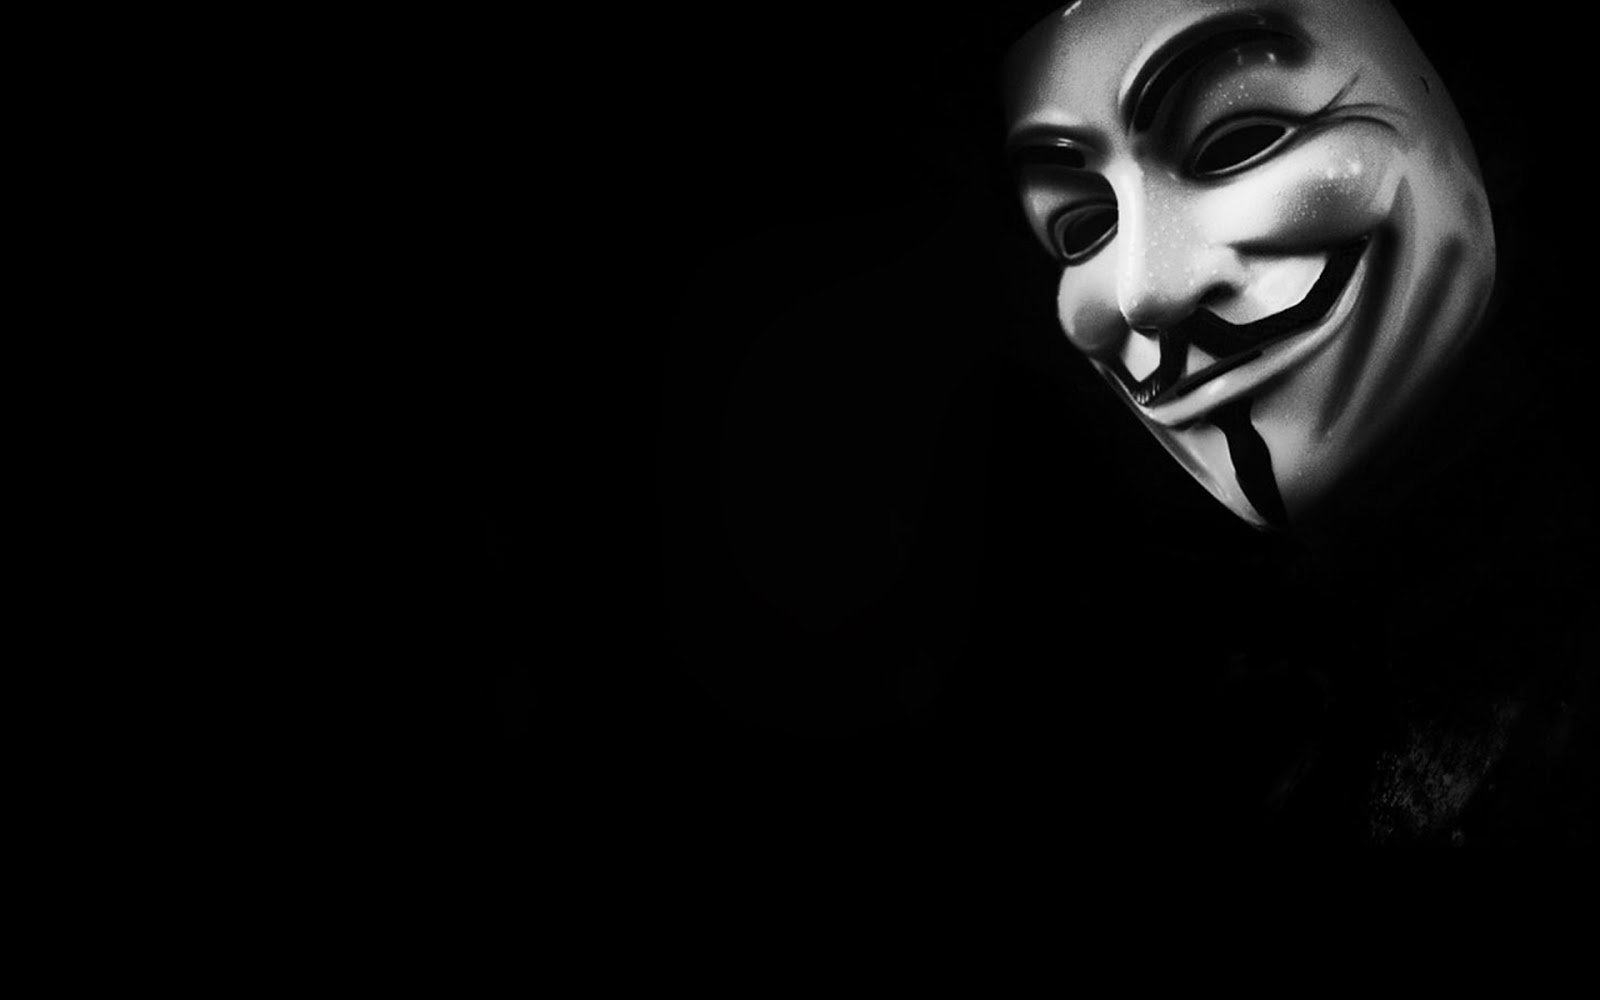 hacker wallpaper hd 1366x768,black,face,facial expression,darkness,head